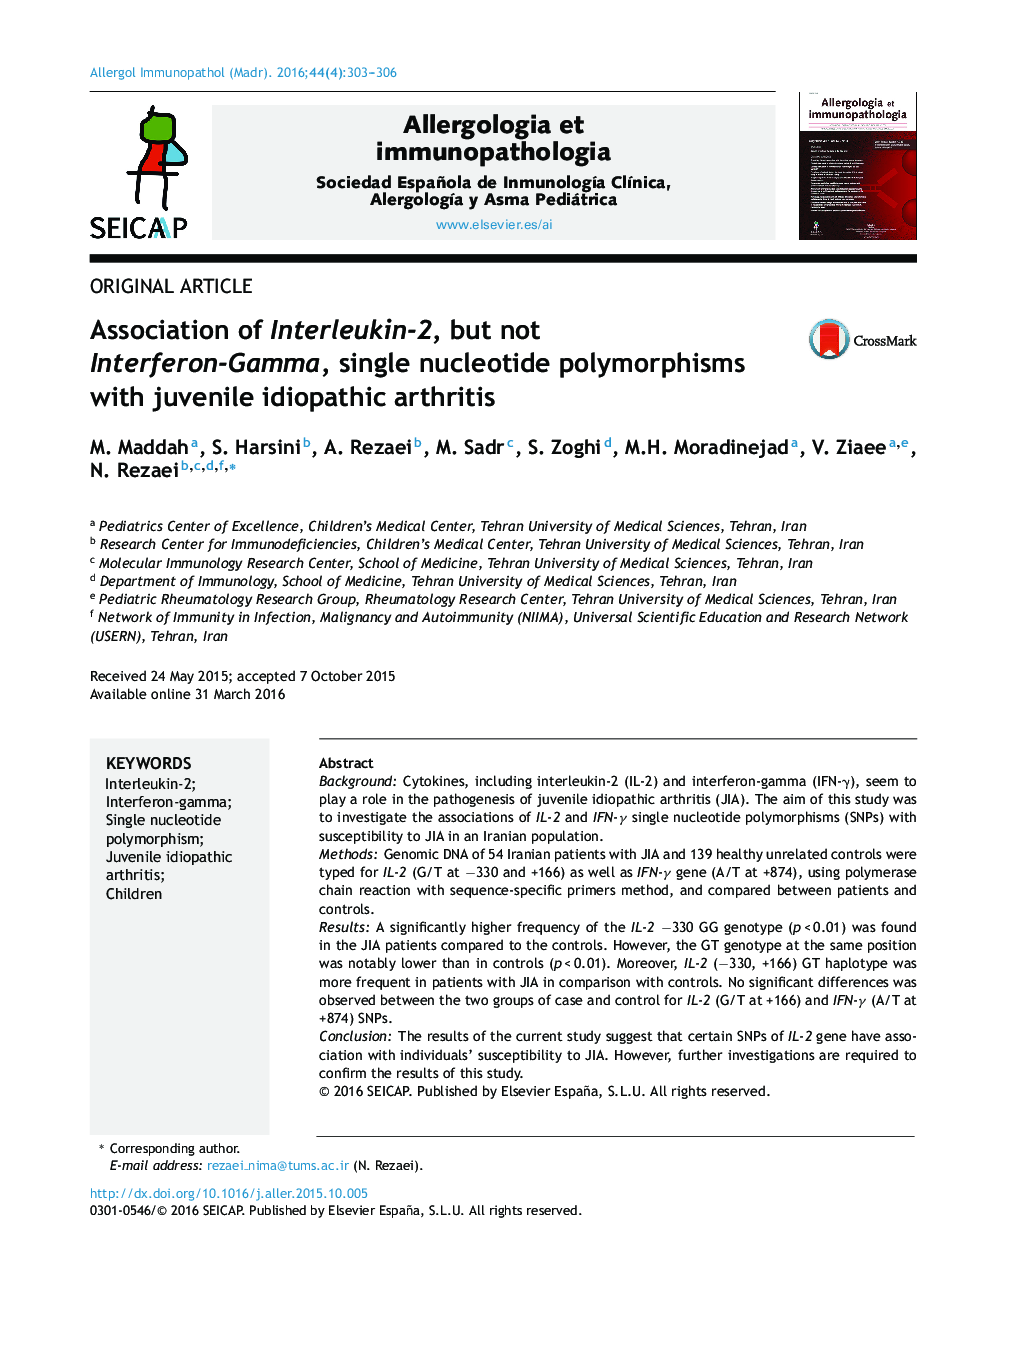 Association of Interleukin-2, but not Interferon-Gamma, single nucleotide polymorphisms with juvenile idiopathic arthritis